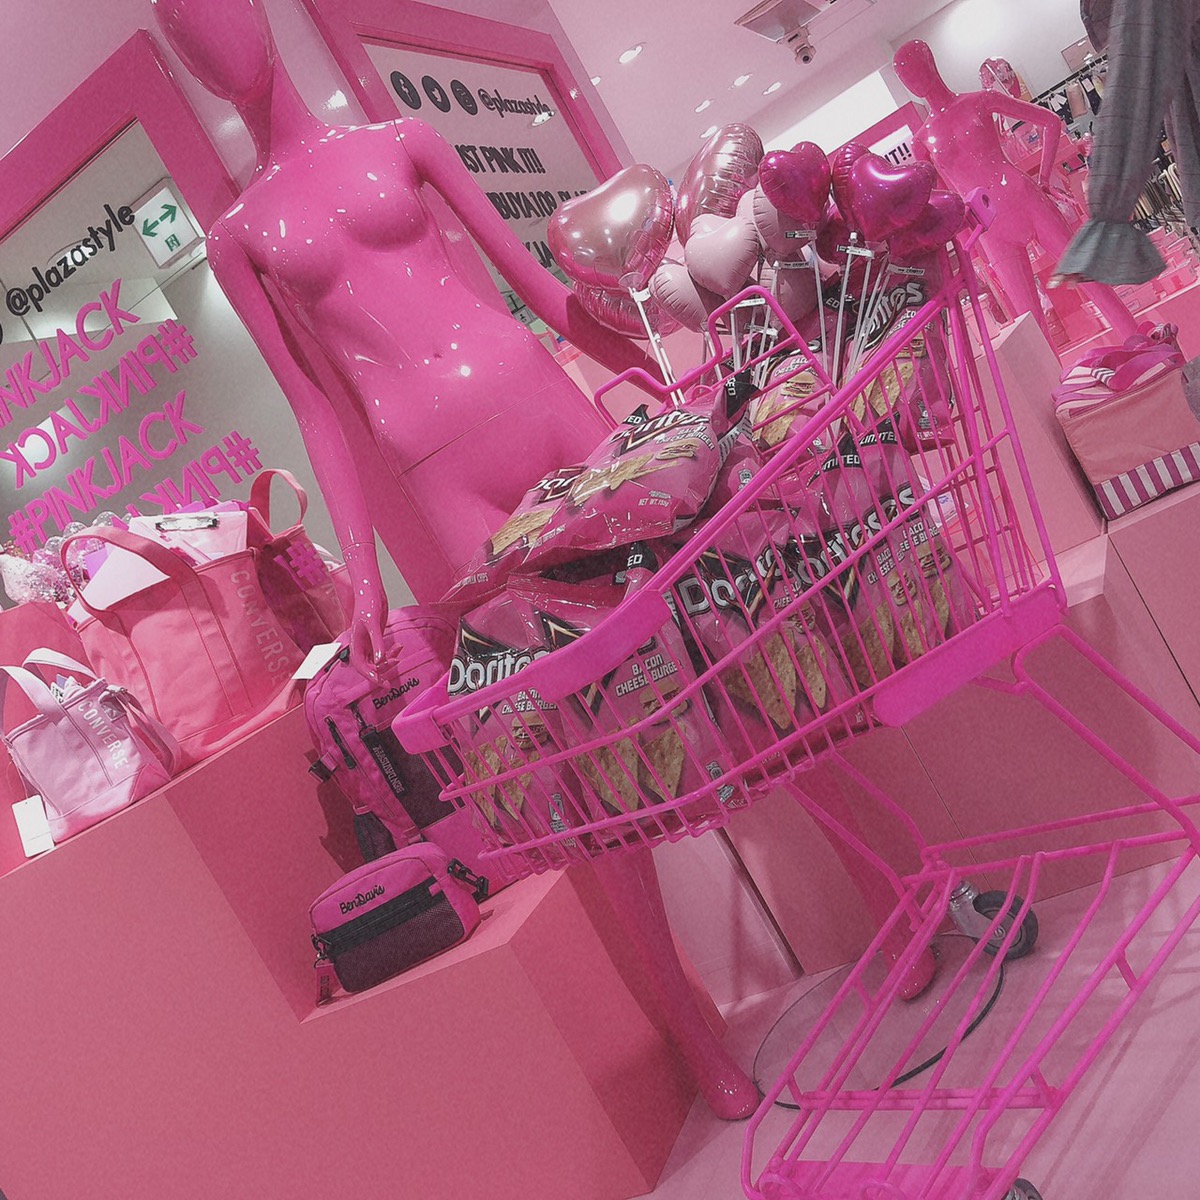 Shibuya109 マルキュー のplaza店内がピンク一色に 映えスポットとおしゃれな写真の撮り方を紹介 Apptopi女子で行ってきたよ Apptopi